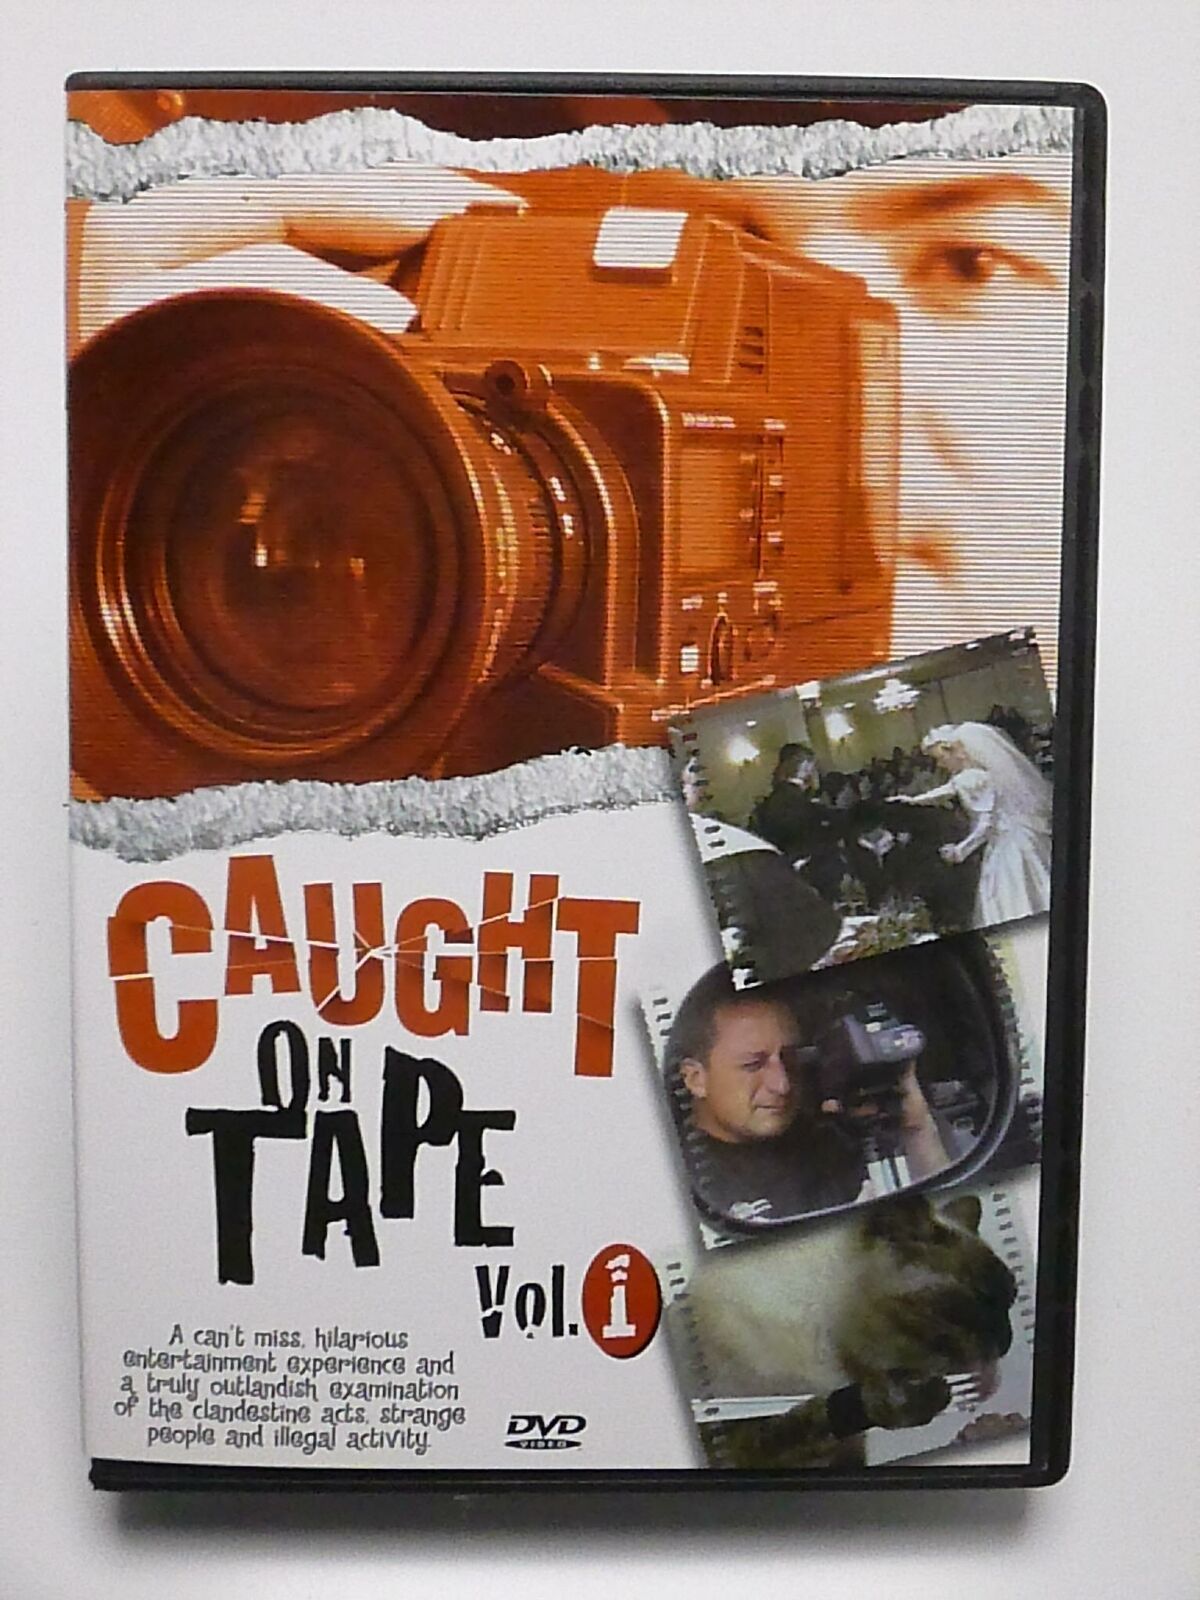 Caught on Tape Vol. 1 (DVD, 2002) - G0823